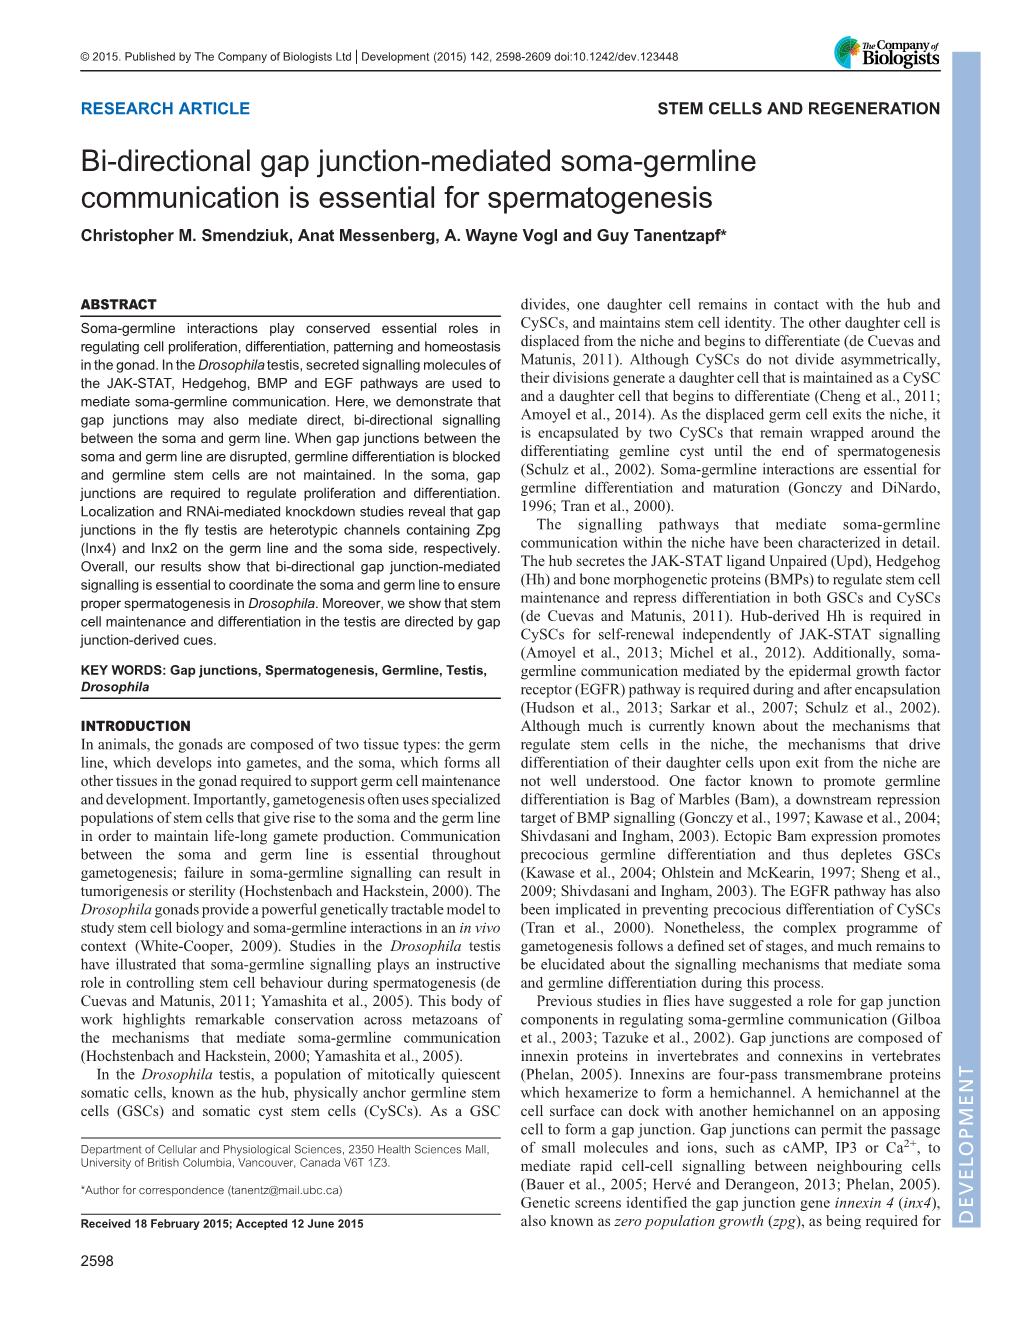 Bi-Directional Gap Junction-Mediated Soma-Germline Communication Is Essential for Spermatogenesis Christopher M